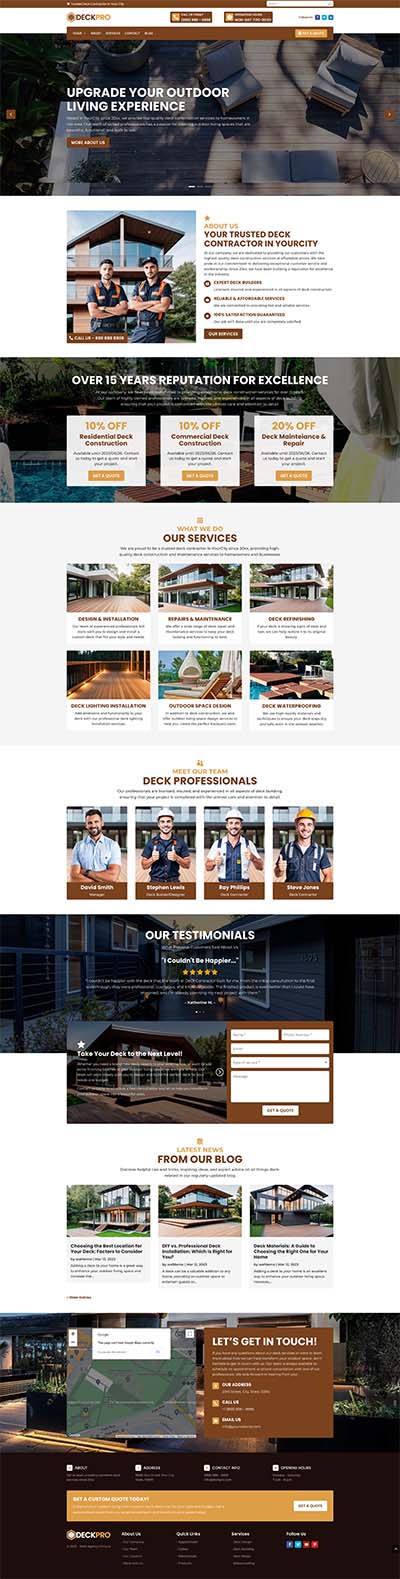 Deck-Contractor-website-home-page